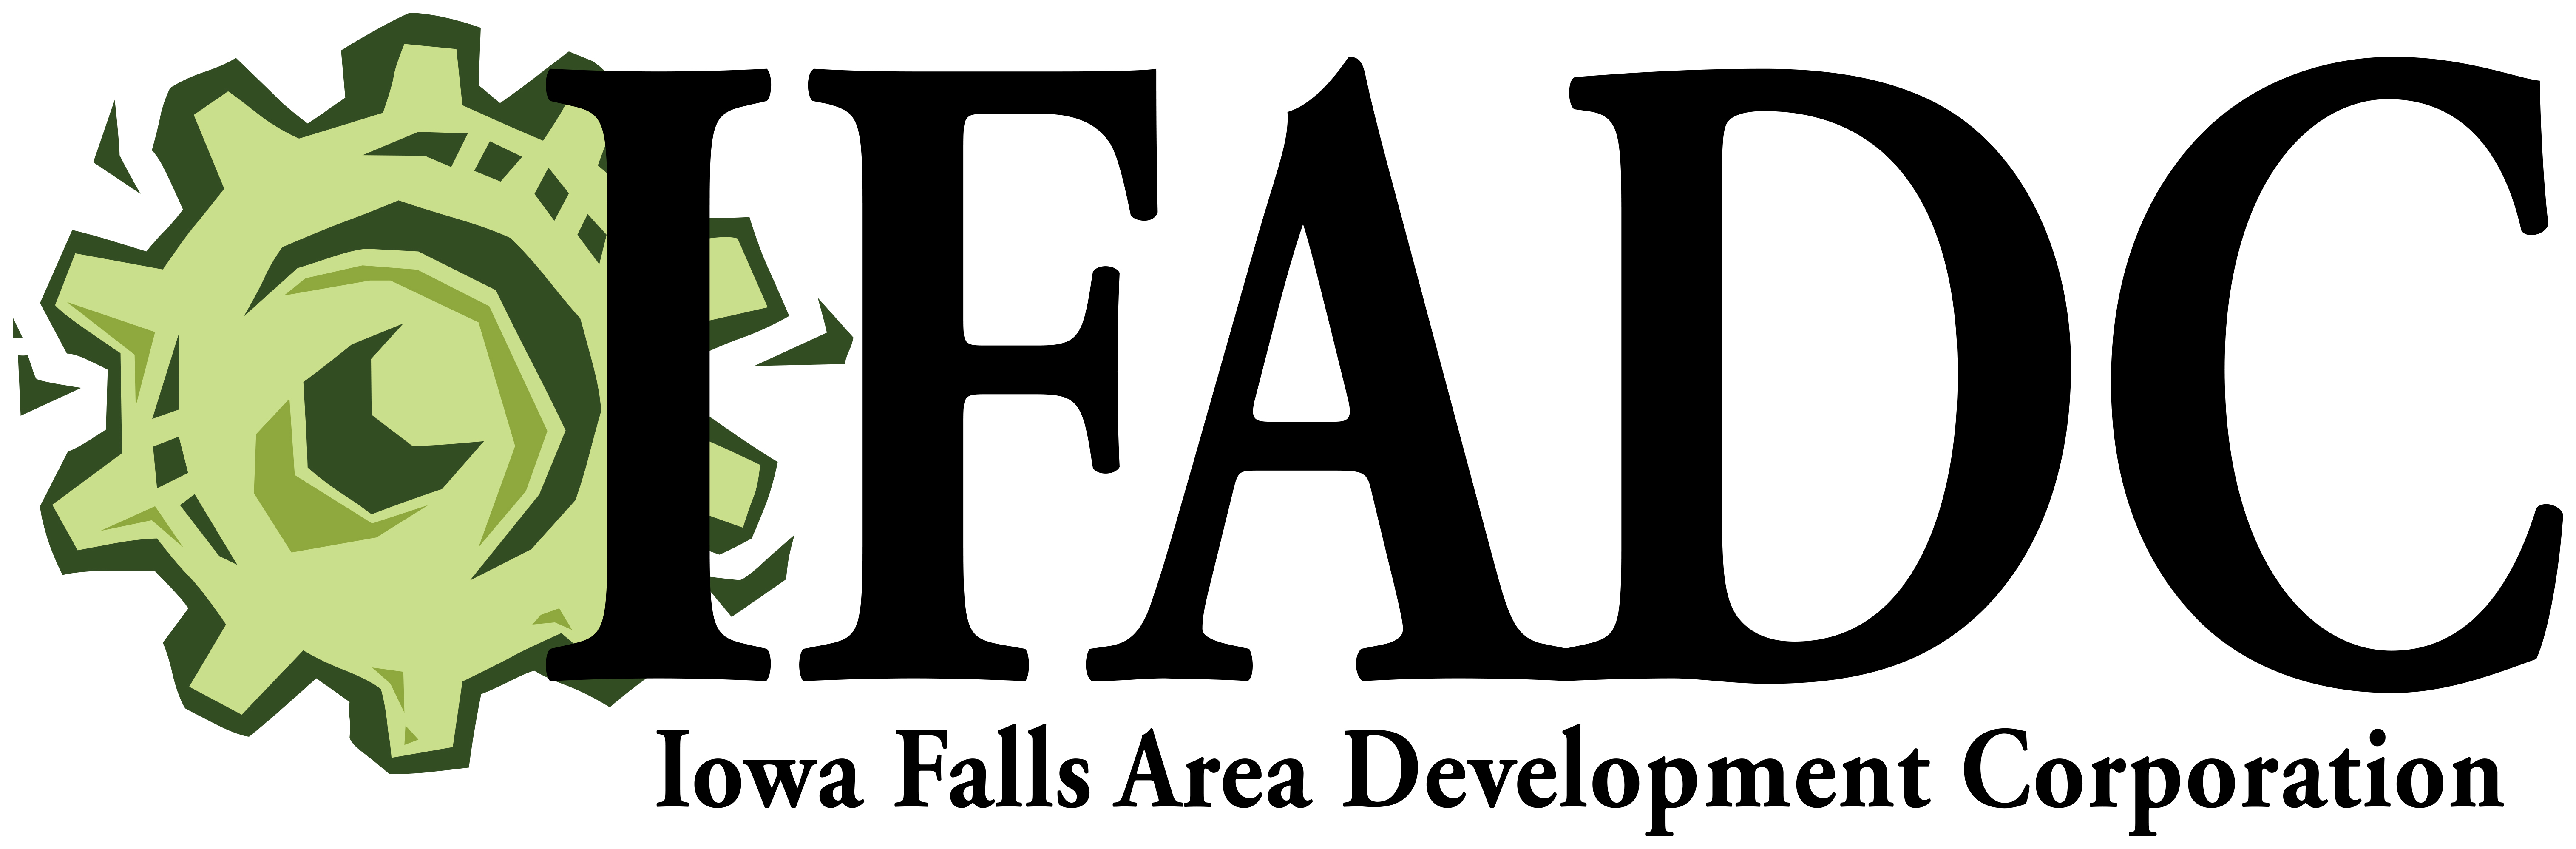 Iowa Falls Area Development Corporation